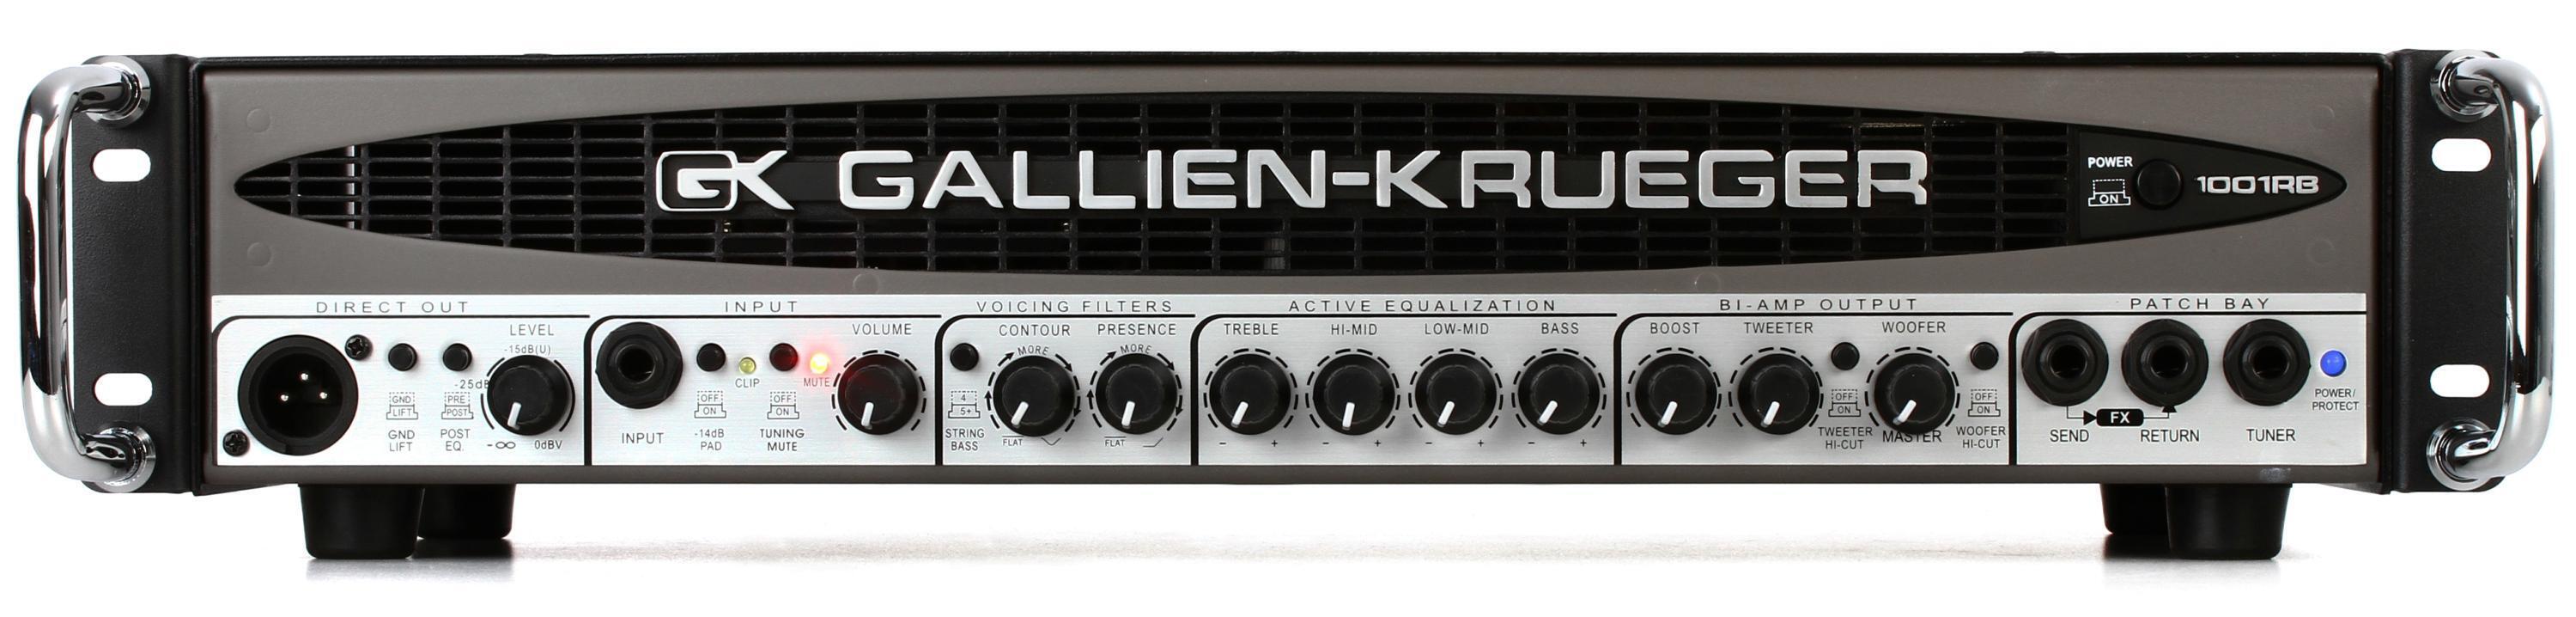 Gallien-Krueger 1001RB-II 700+50-Watt Compact Bass Head | Sweetwater